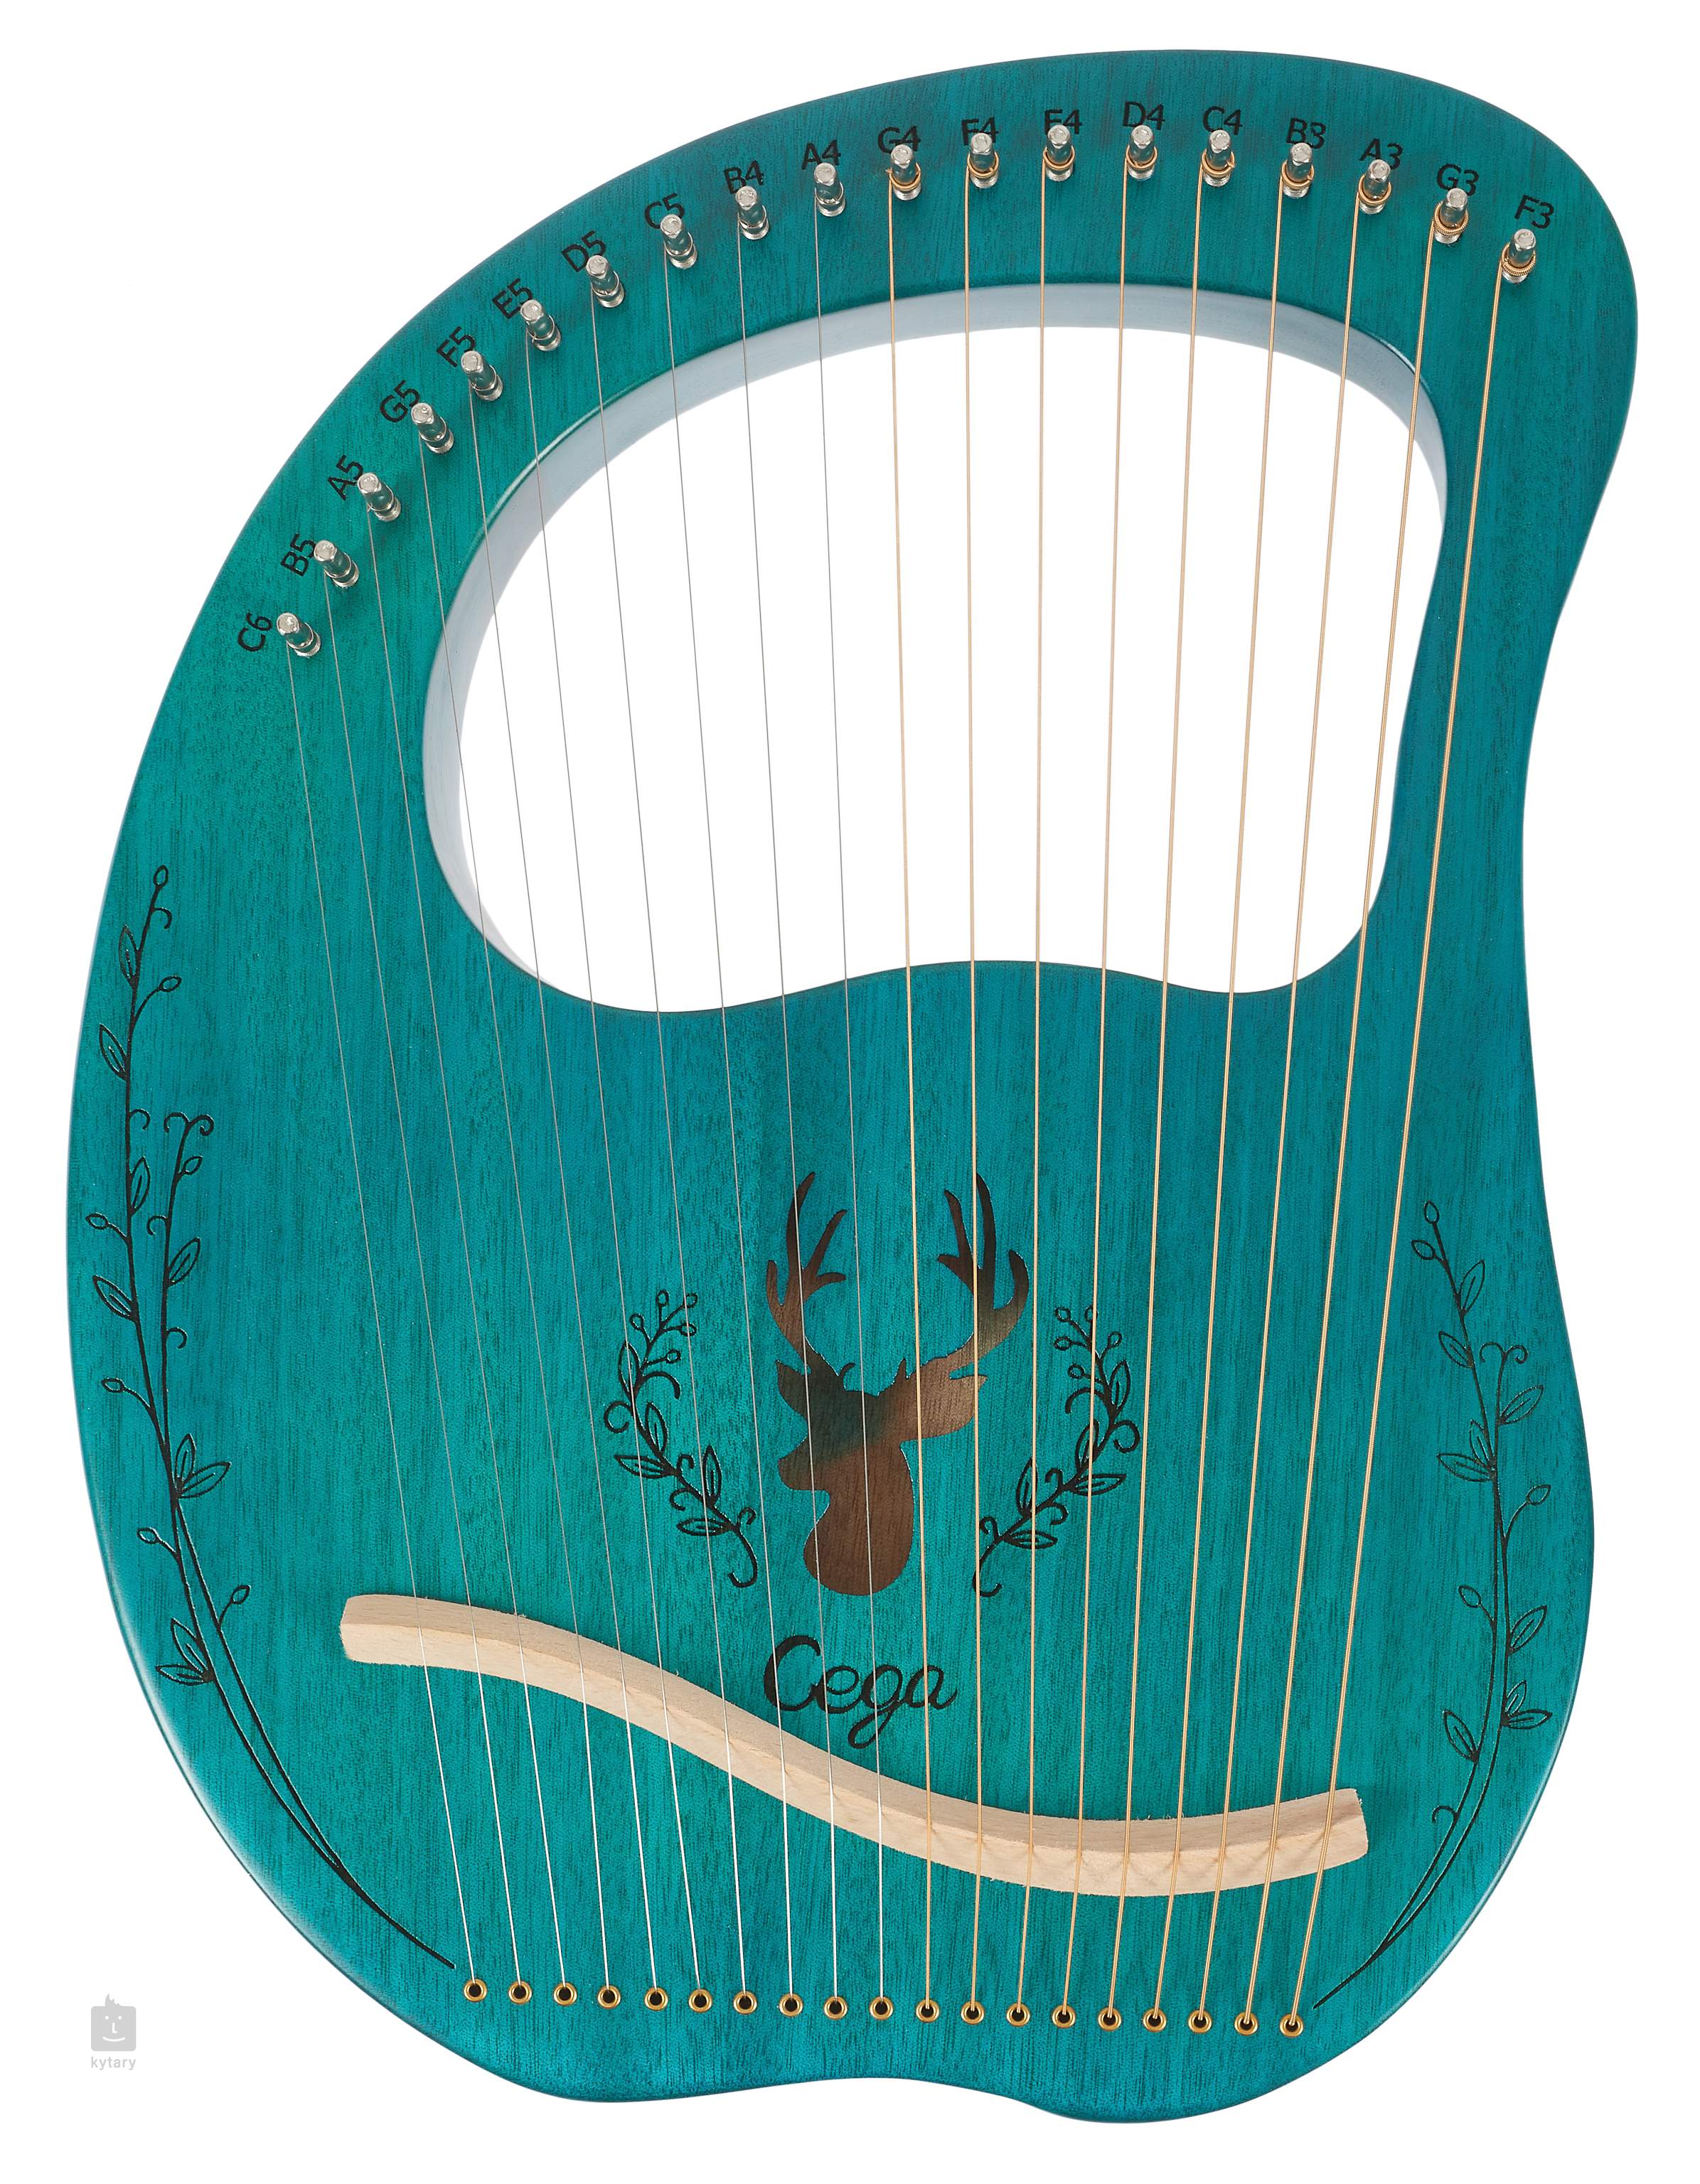 CEGA Harp 19 Strings Blue Harpe